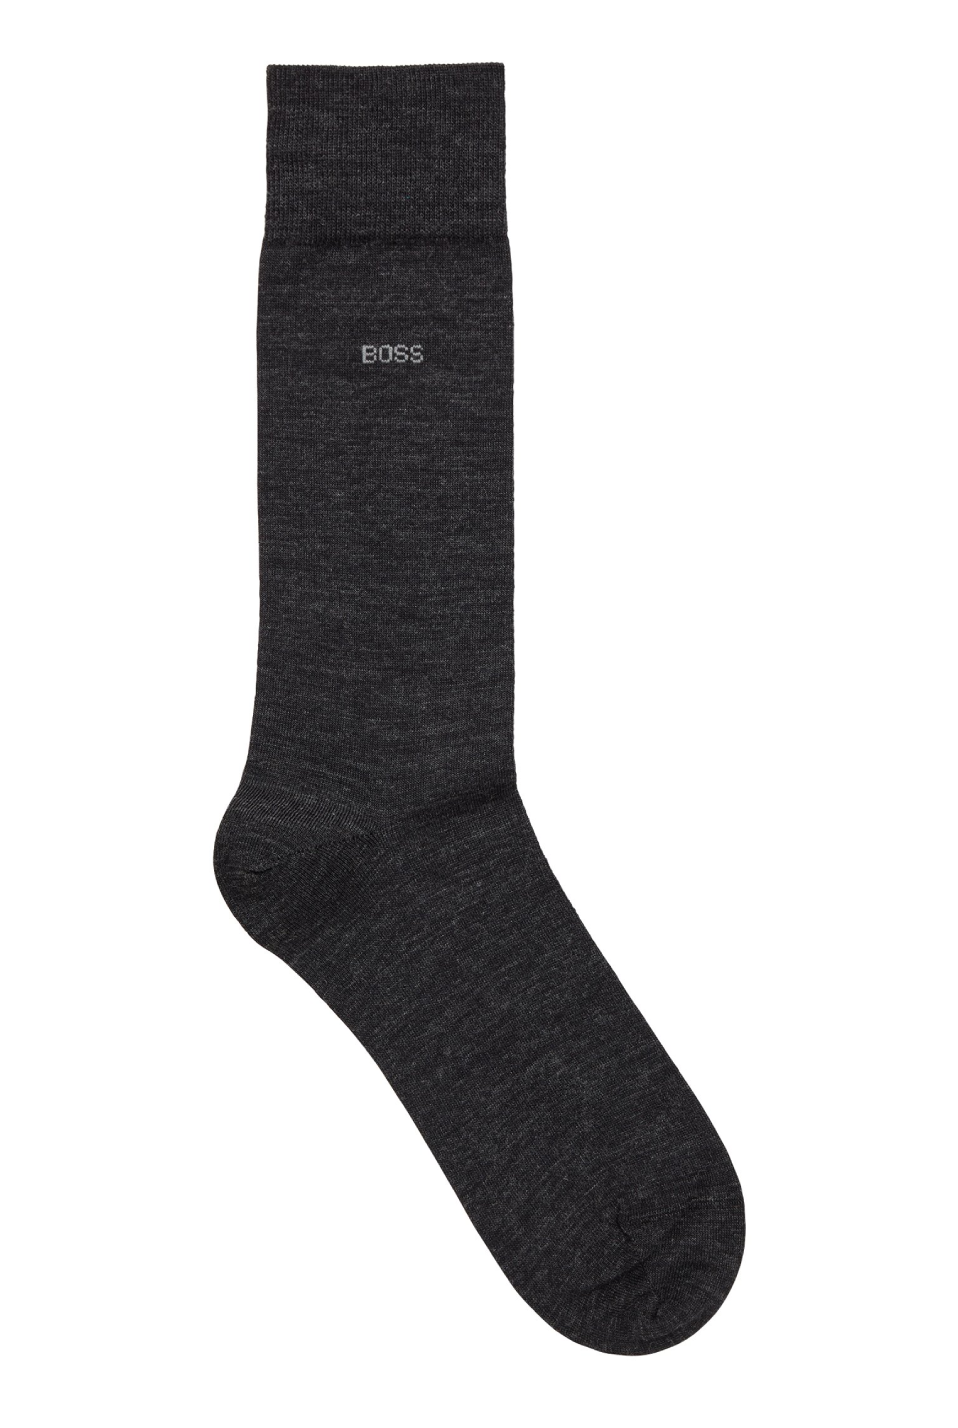 BOSS Edward Men's Socks